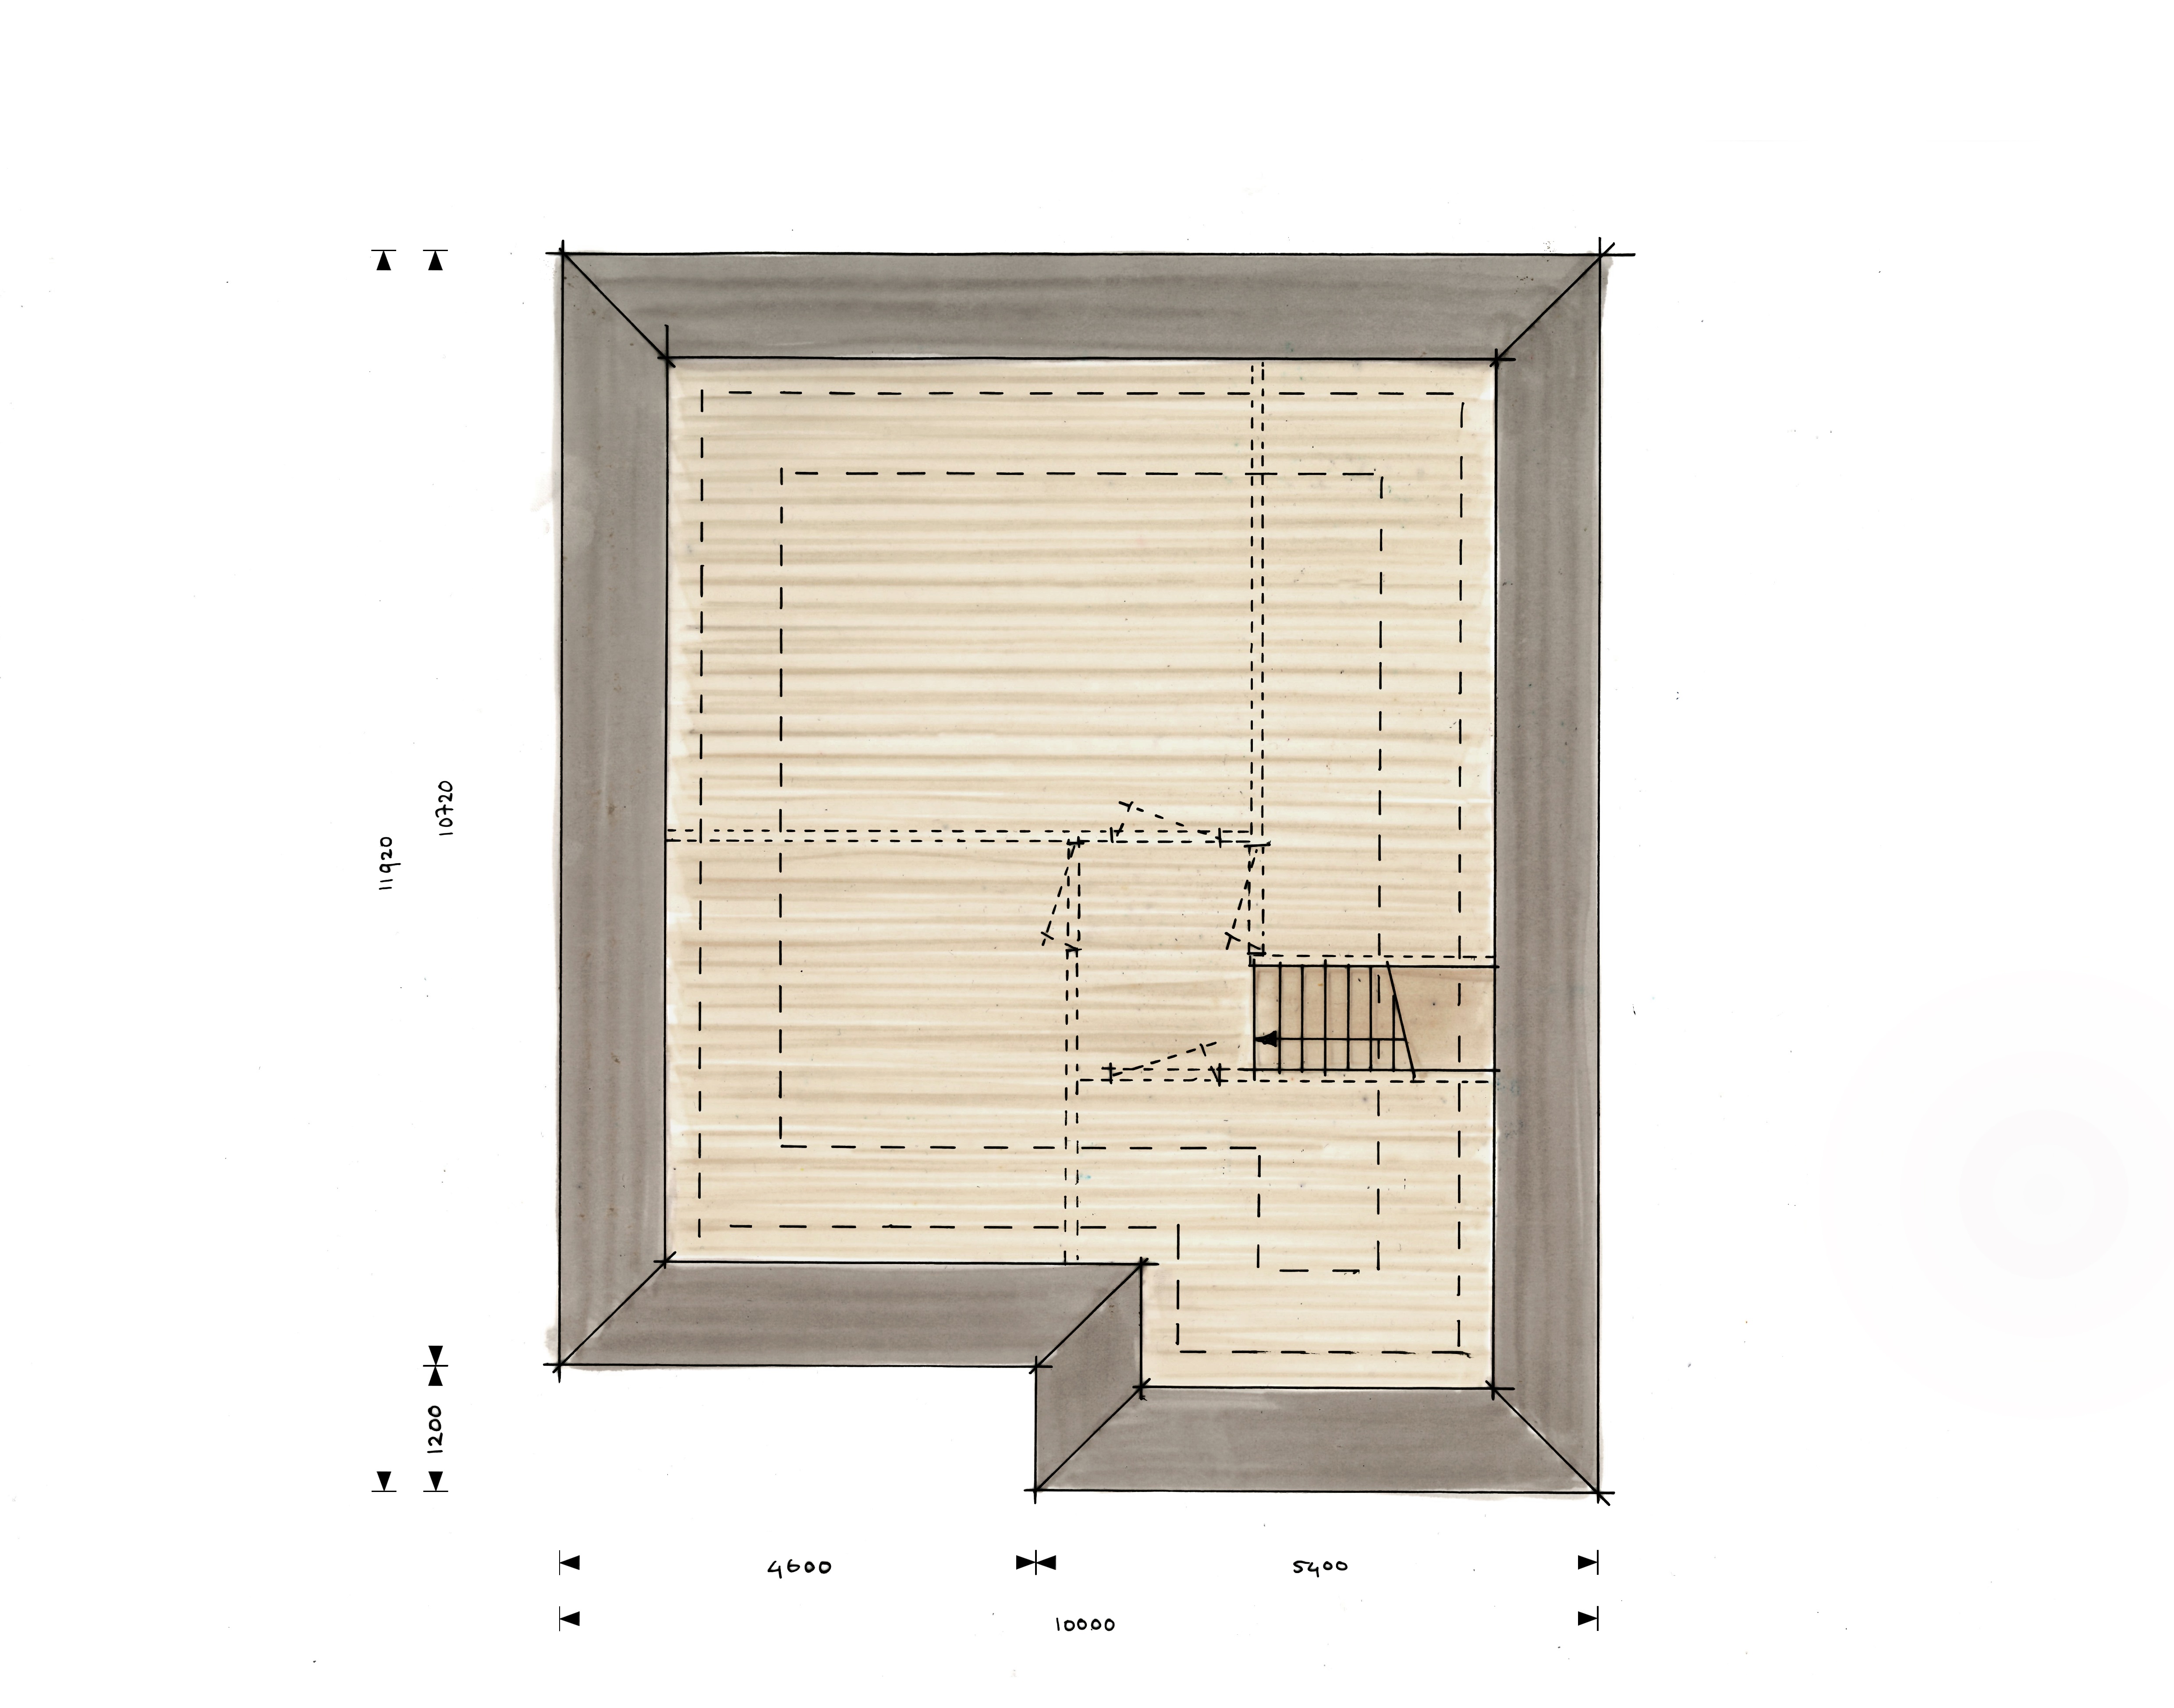 Foto: Huis bouwen  ndash  villatype Kolibrie plattegrond zolder   Architectuurwonen